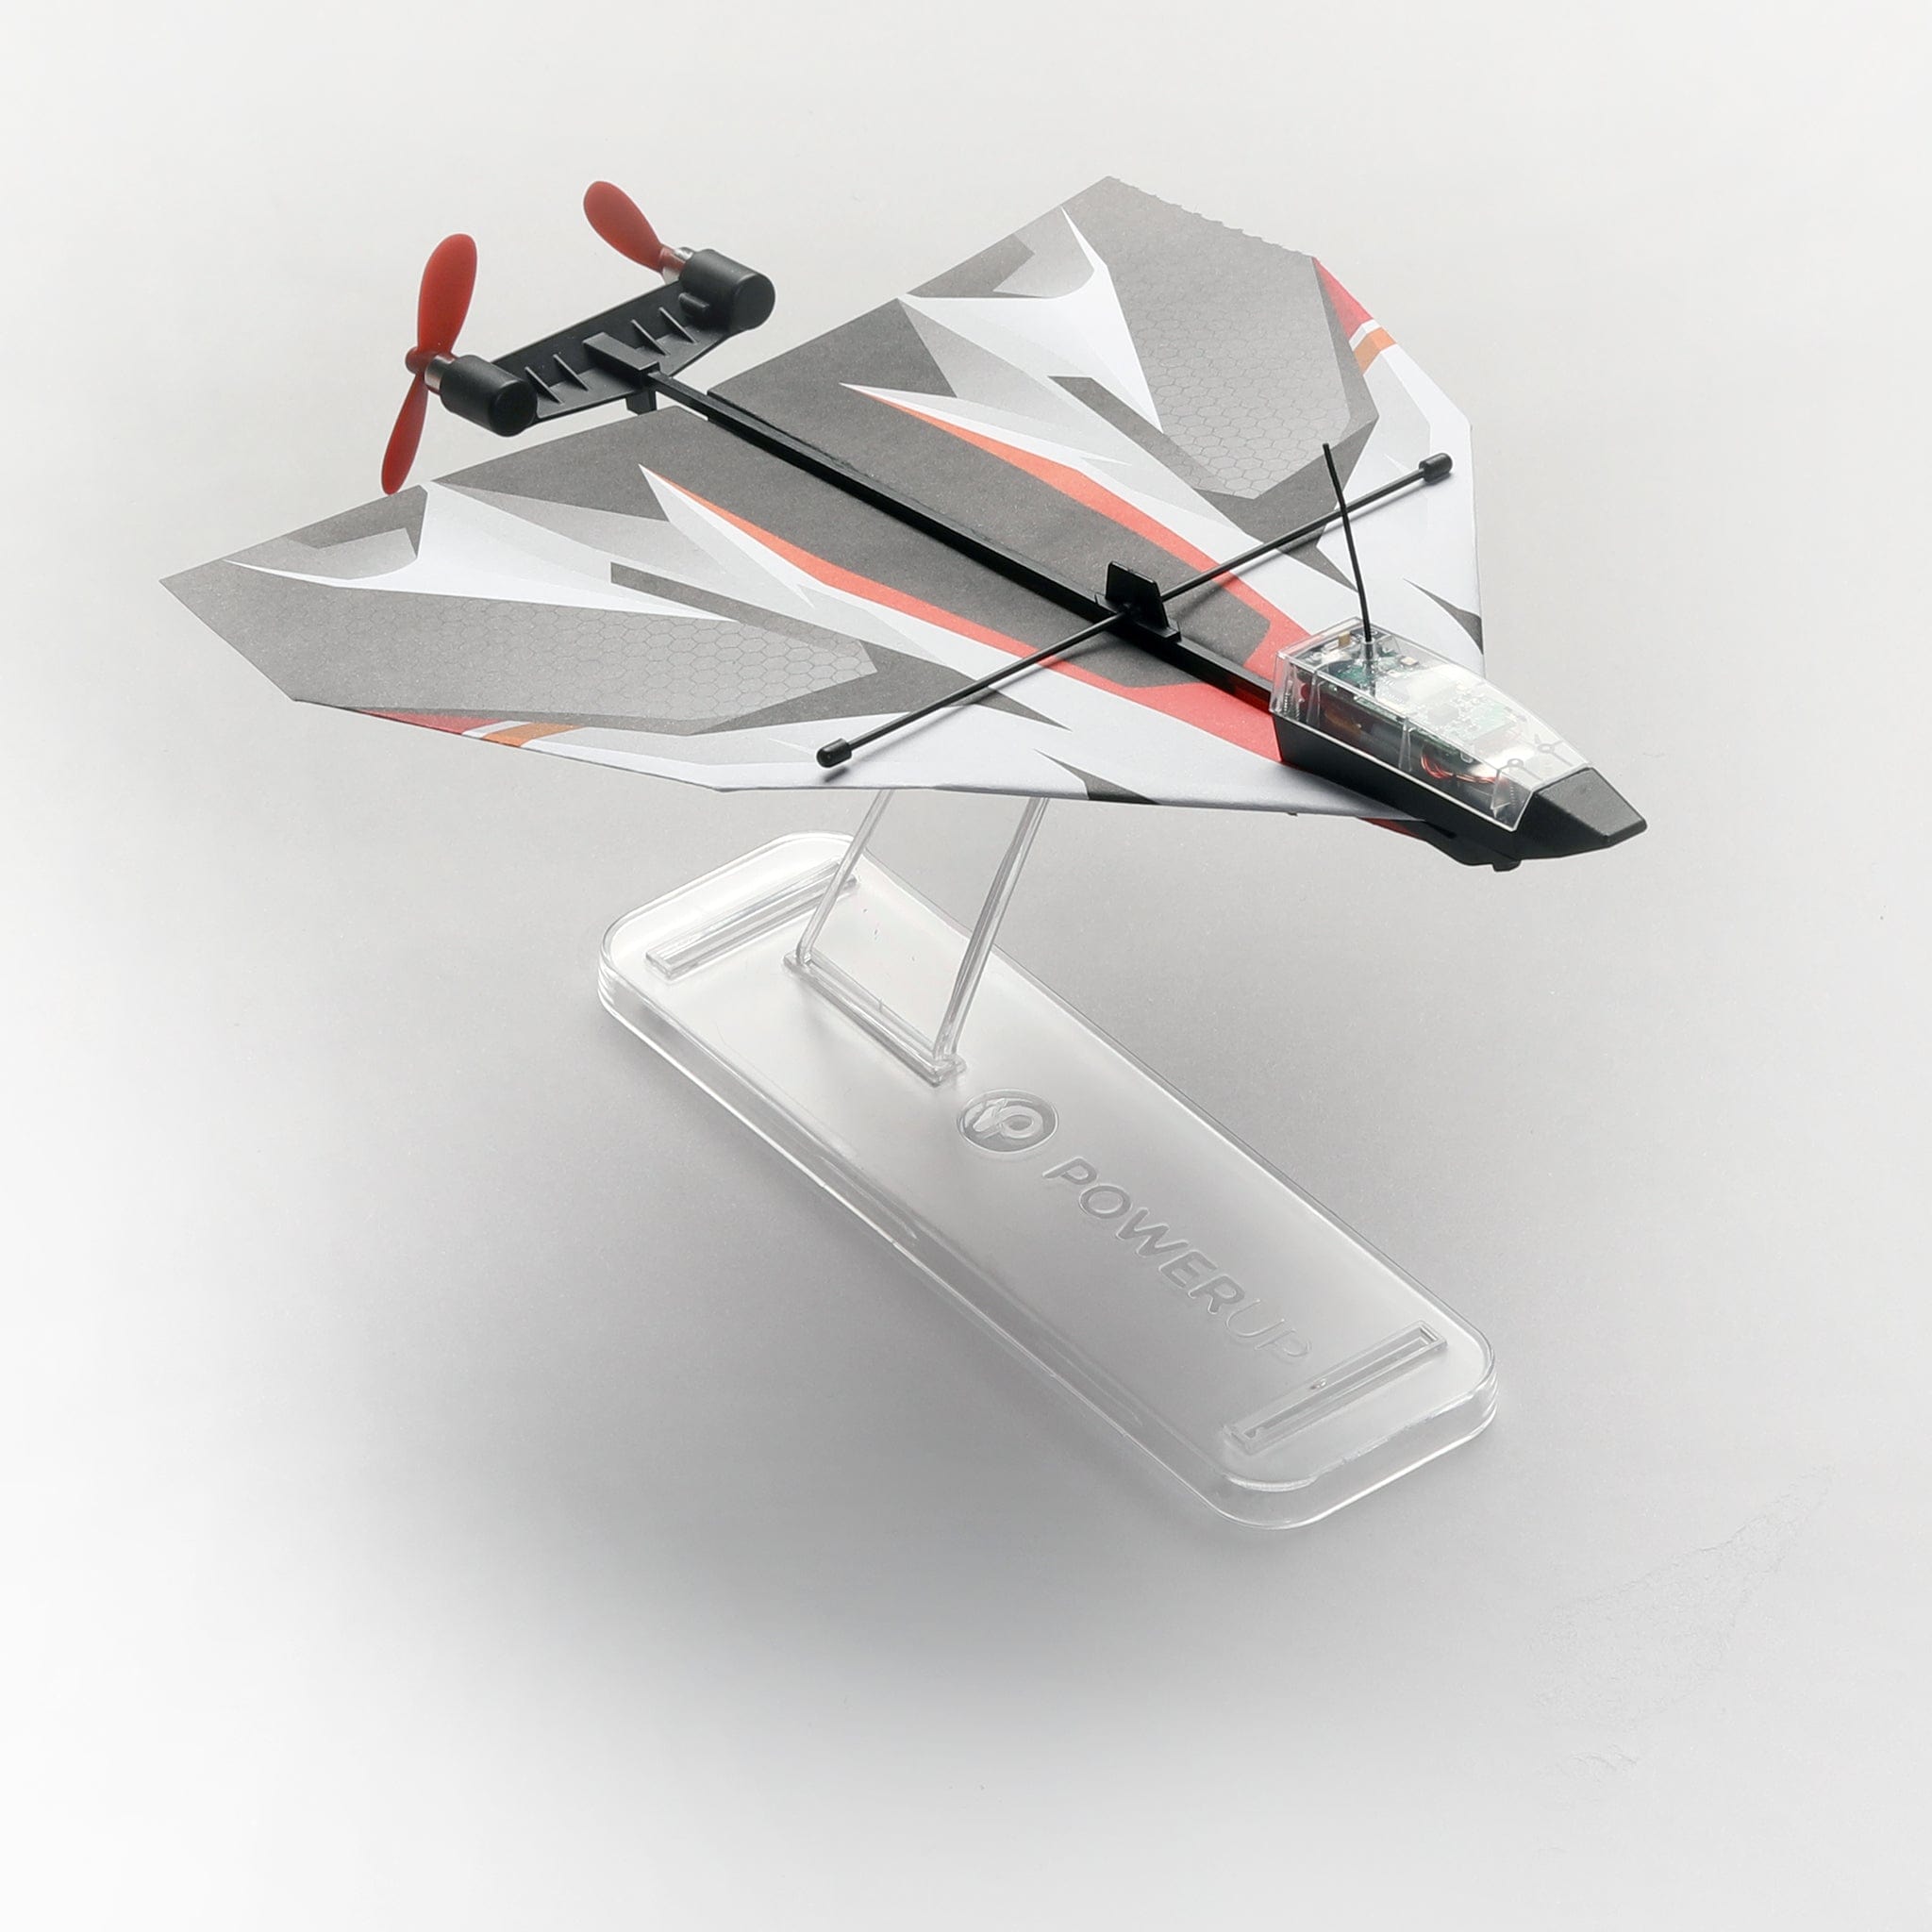 Powerup 4.0 Electric Paper Airplane Kit - RobotShop